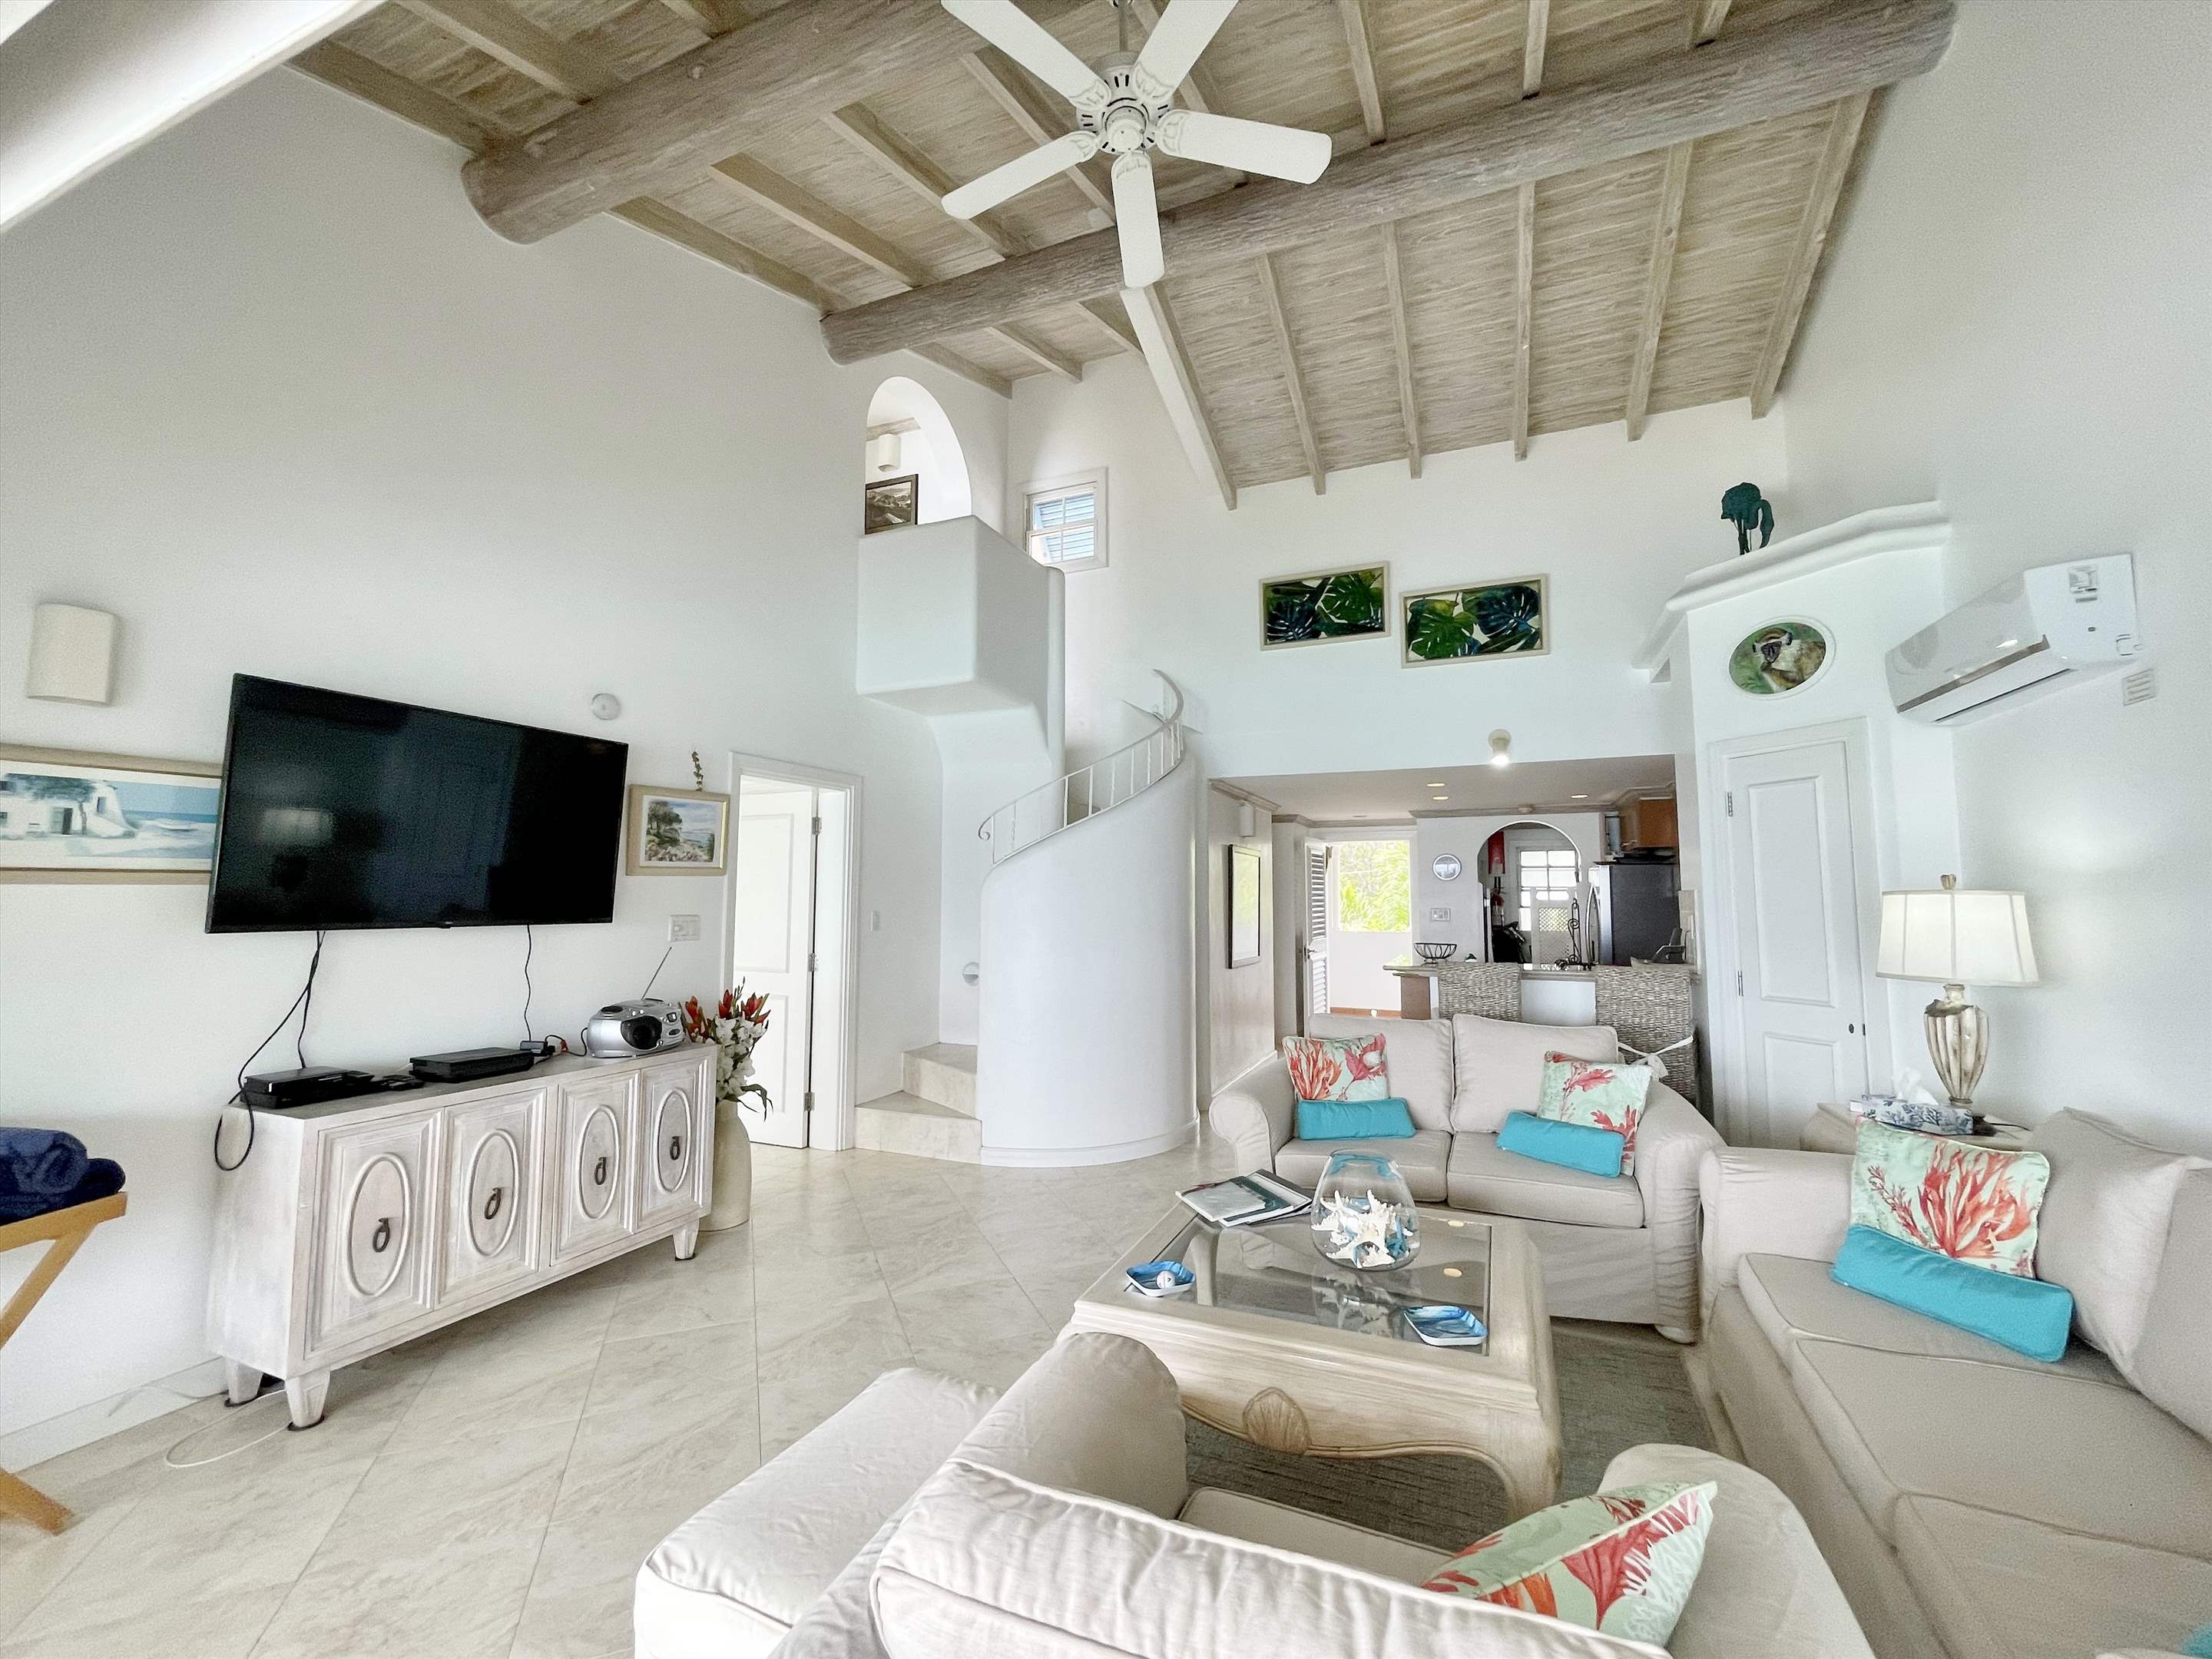 Villas on the Beach 403, 2 bedroom, 2 bedroom apartment in St. James & West Coast, Barbados Photo #5